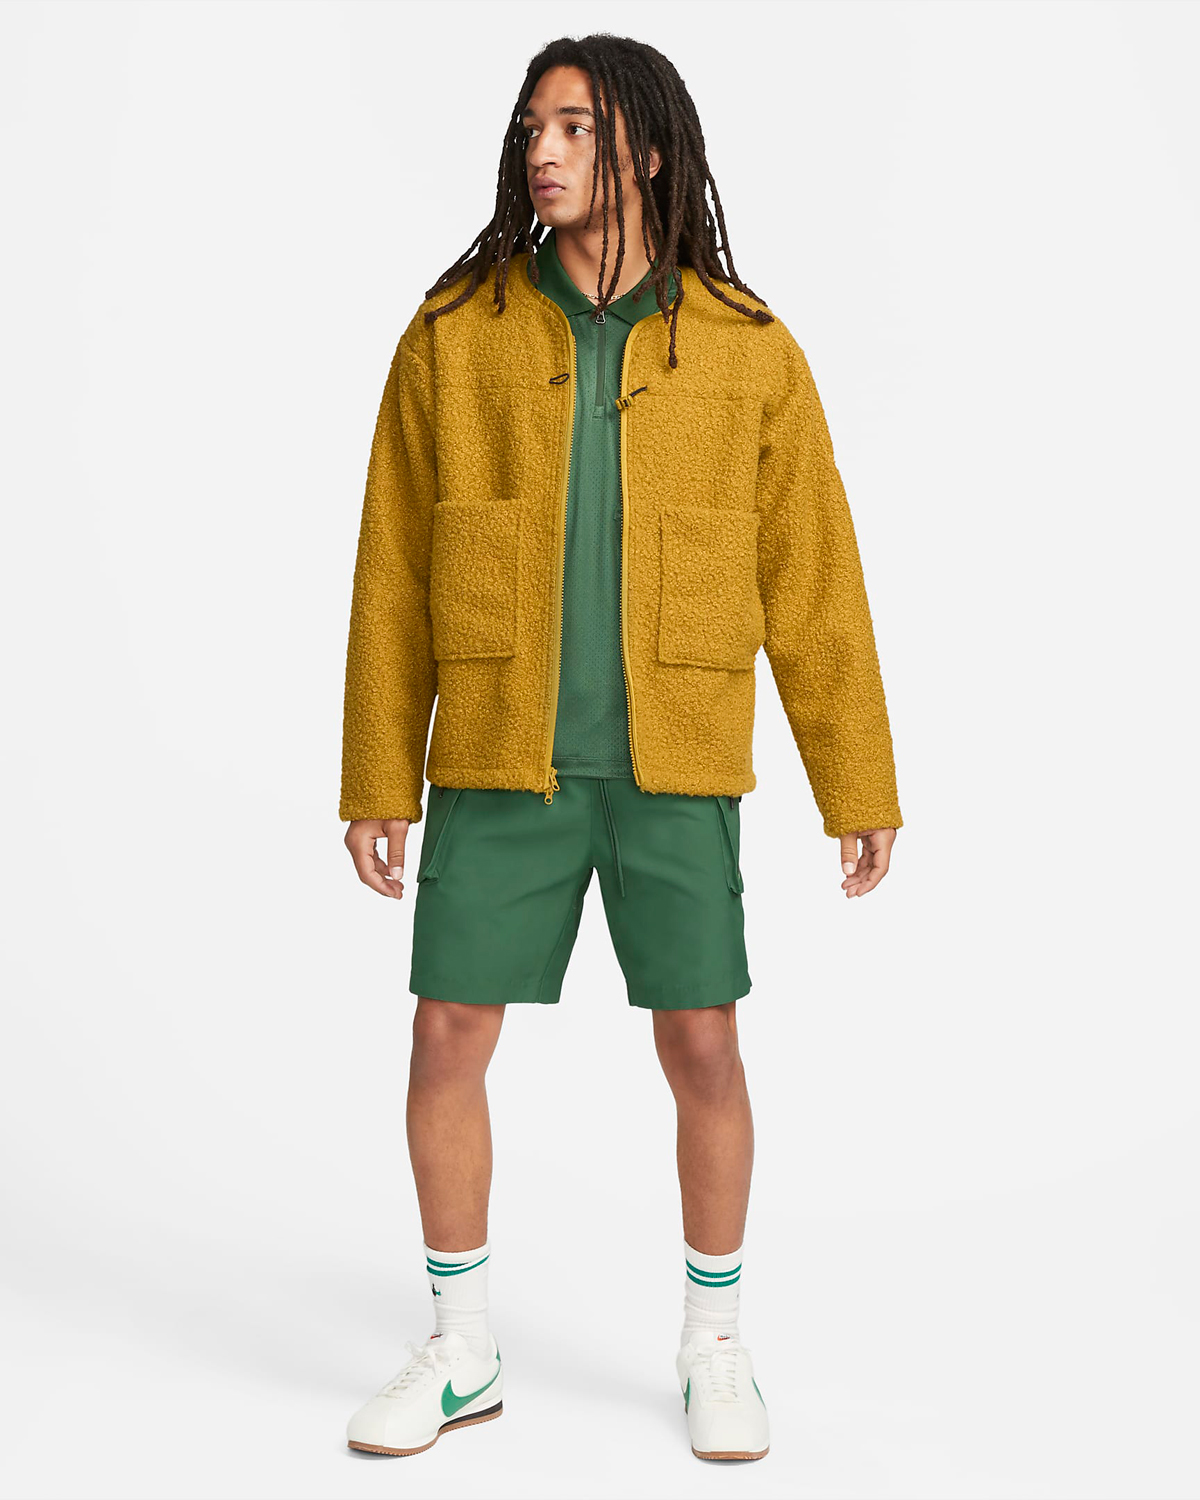 Nike-Sportswear-Tech-Pack-Utility-Shirt-Shorts-Fir-Green-Outfit